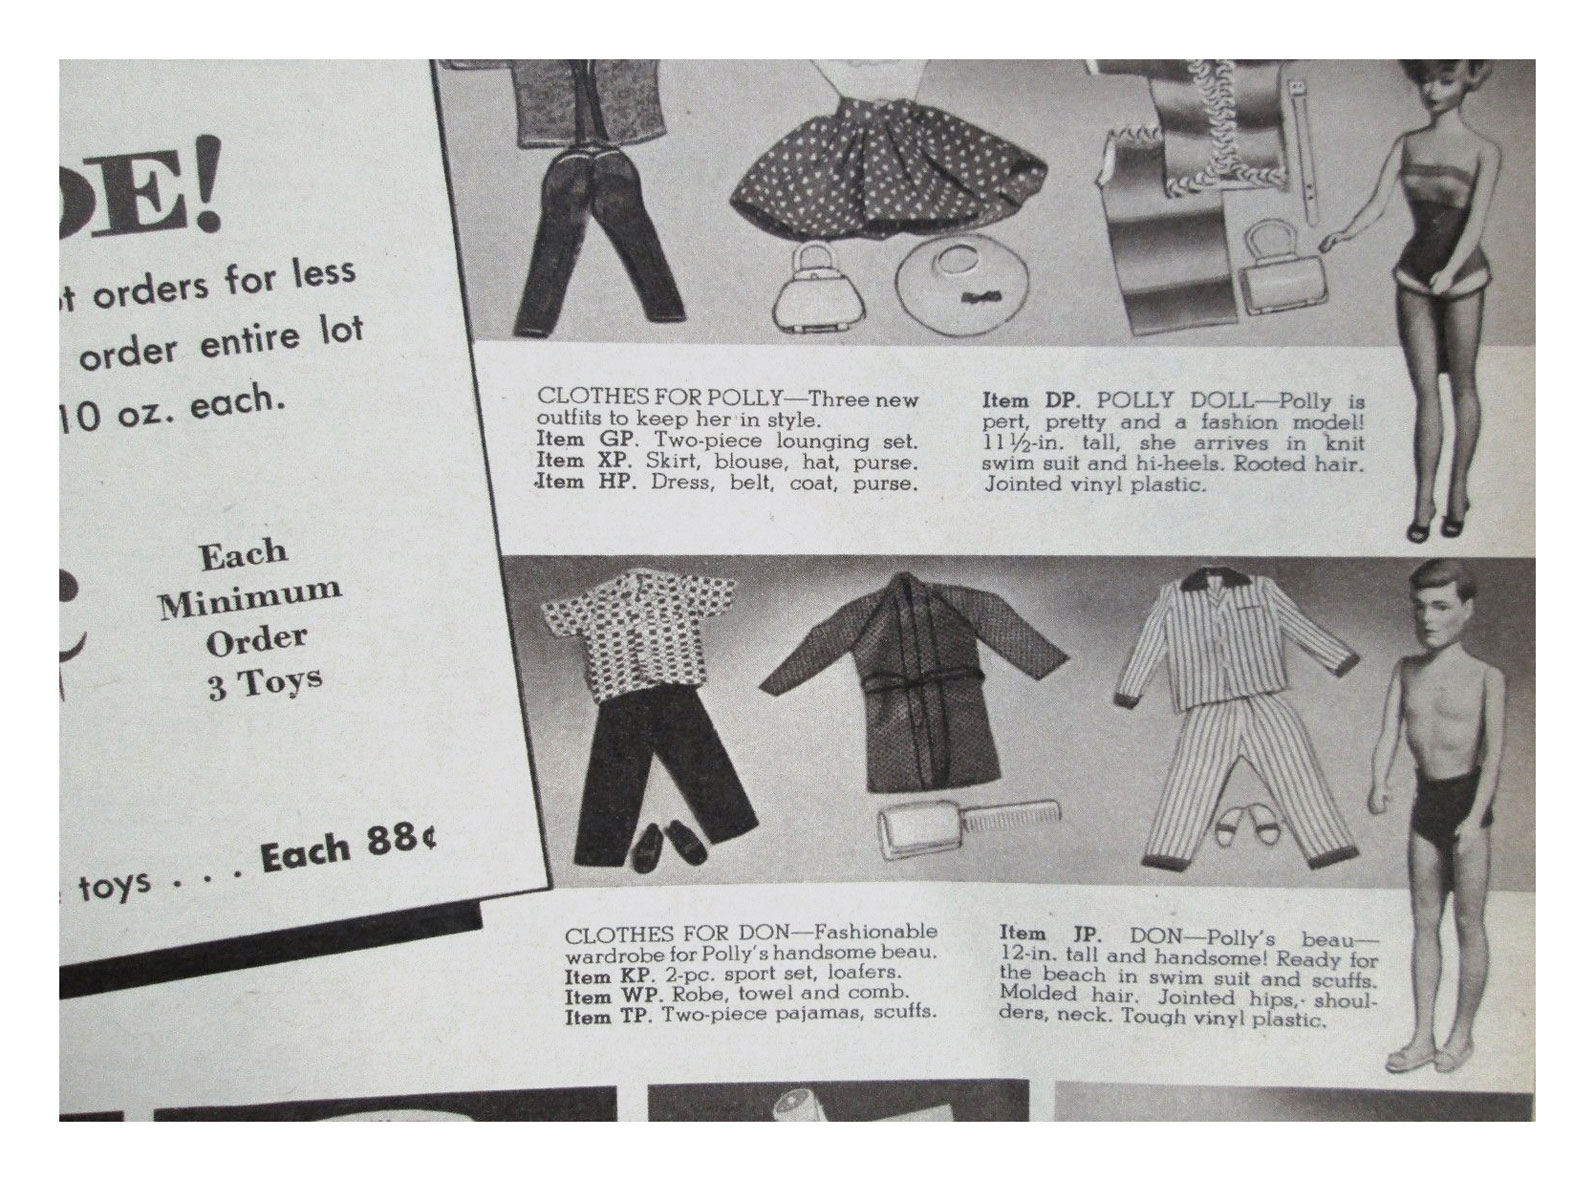 From 1963 Spiegel Fall Winter catalogue